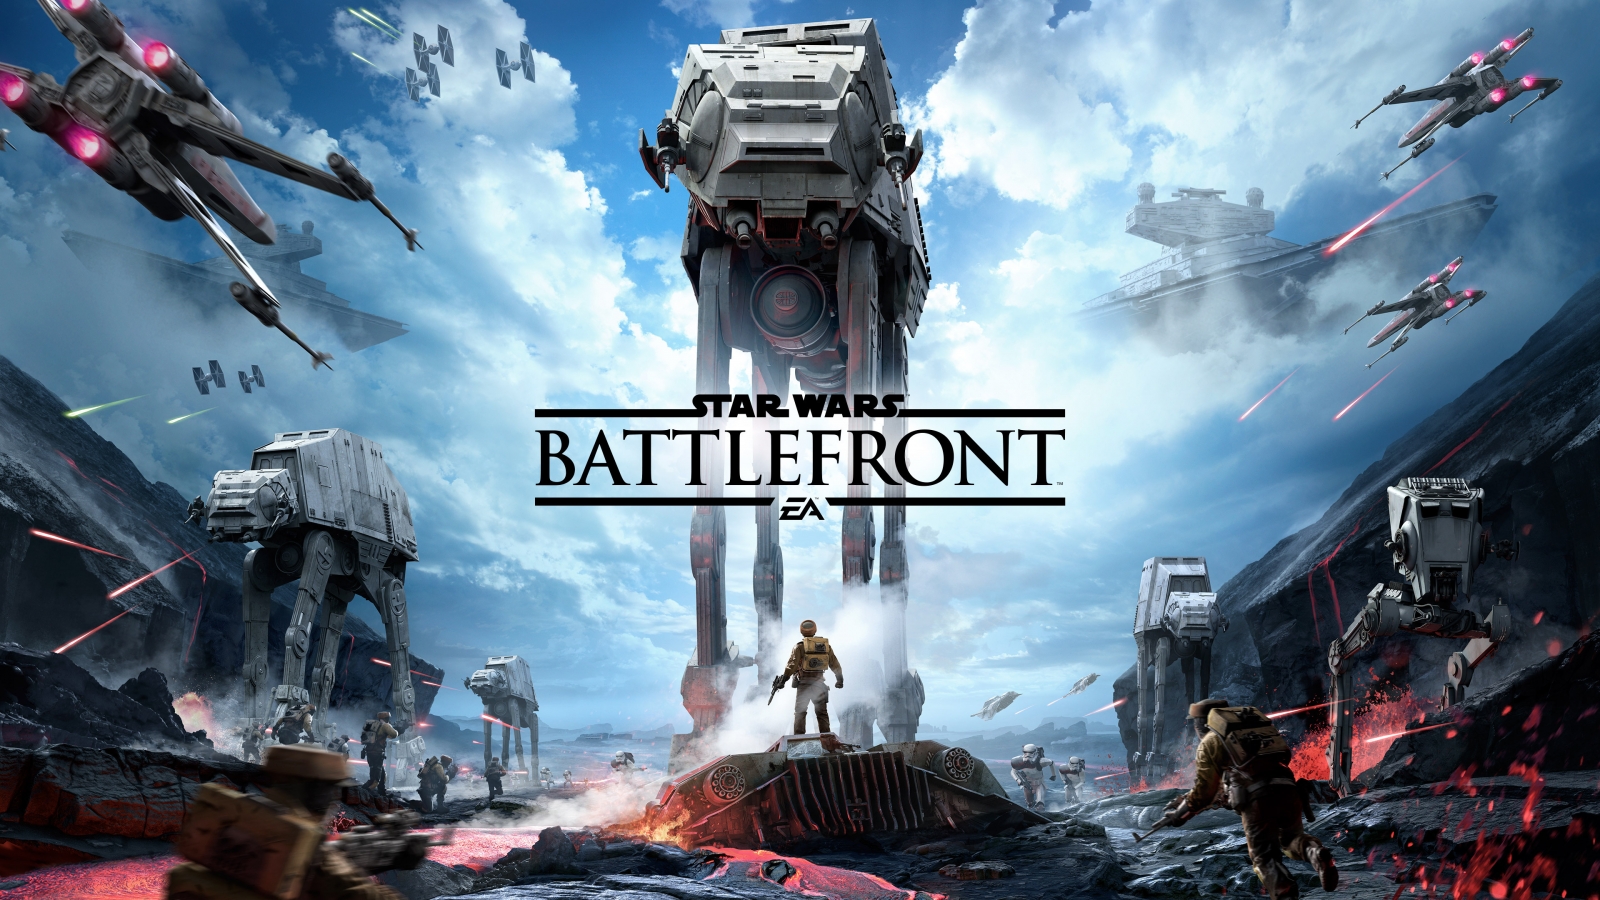 Star Wars Battlefront Poster for 1600 x 900 HDTV resolution